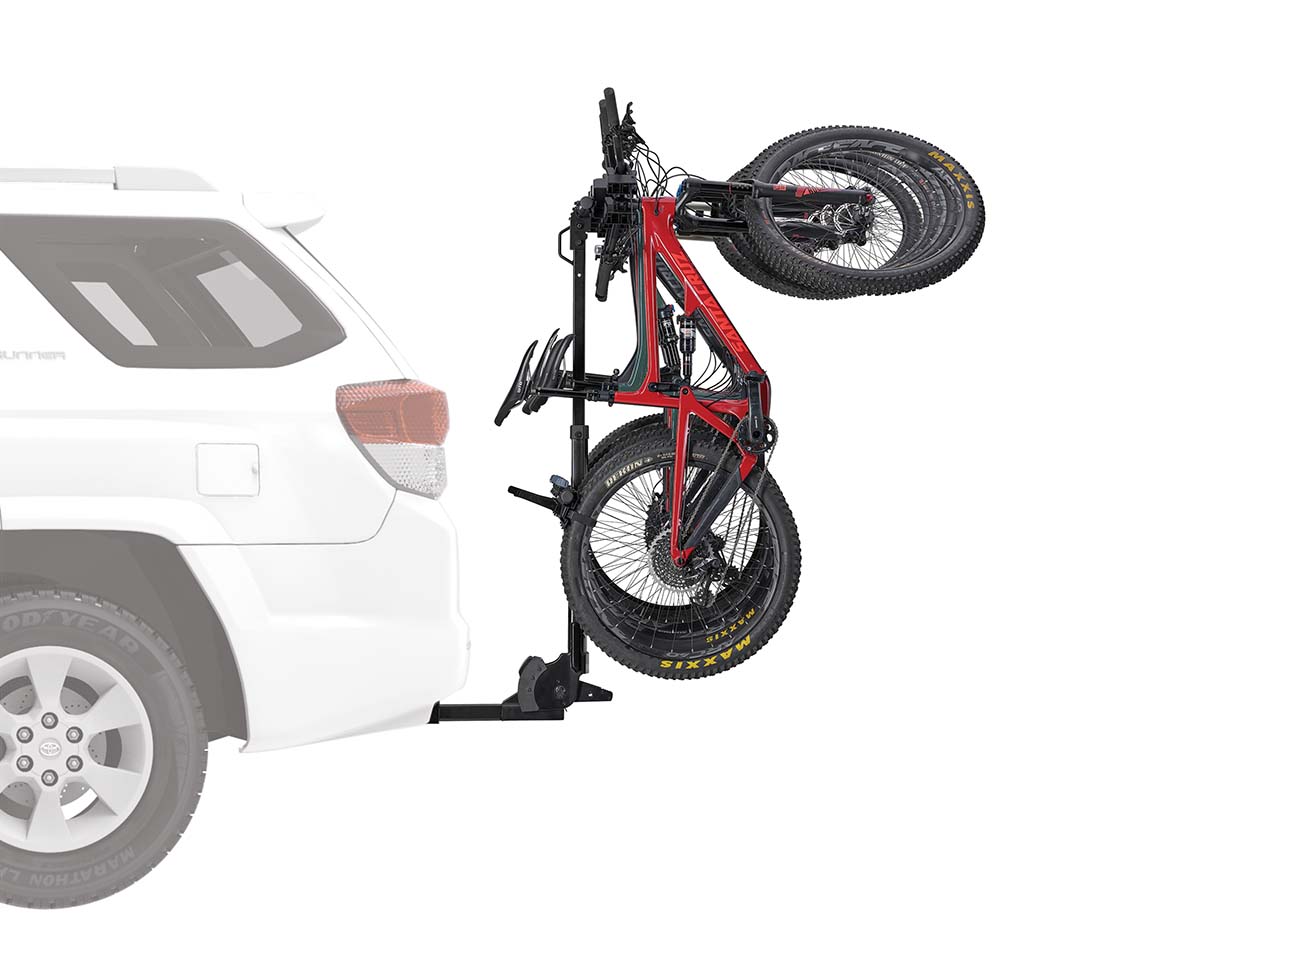 YAKIMA HANGTIGHT 6 porte-vélo vertical pour coffre - Vertige Vélo Ski